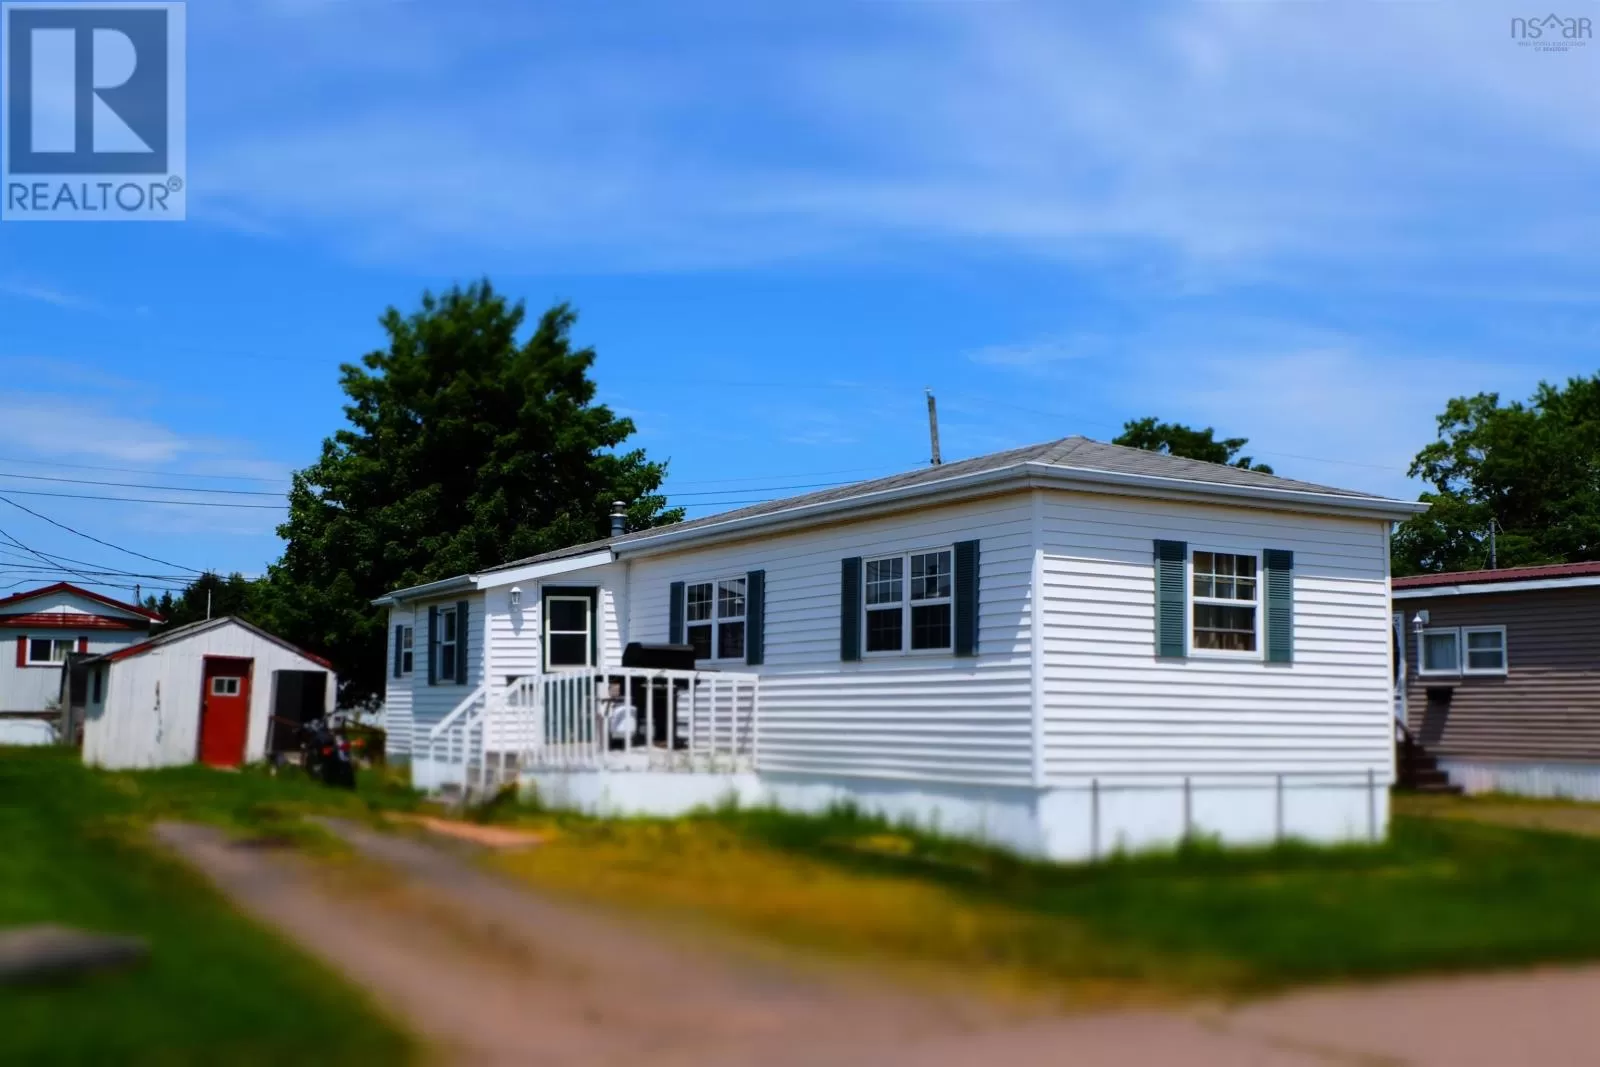 Mobile Home for rent: 7 Bomber Drive, Bible Hill, Nova Scotia B2N 2X1